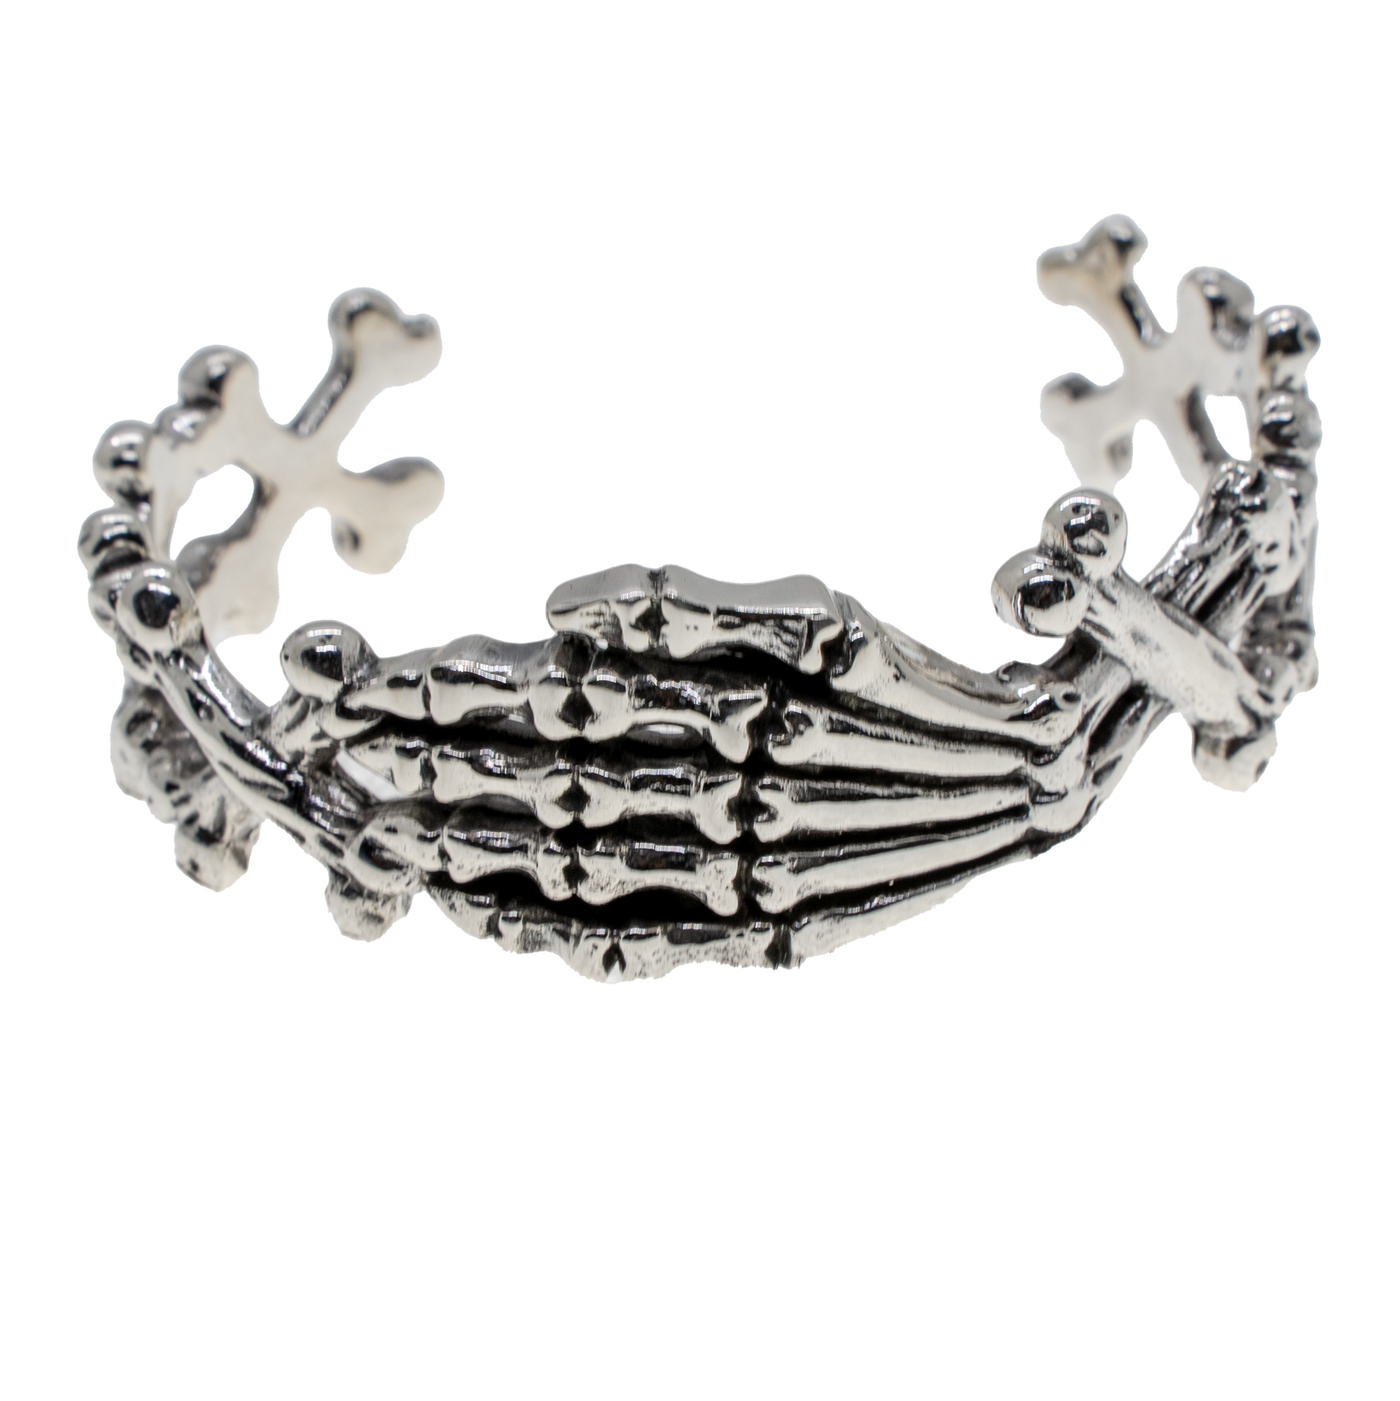 Skeleton Hand with cross bones Bangle - .925 sterling silver